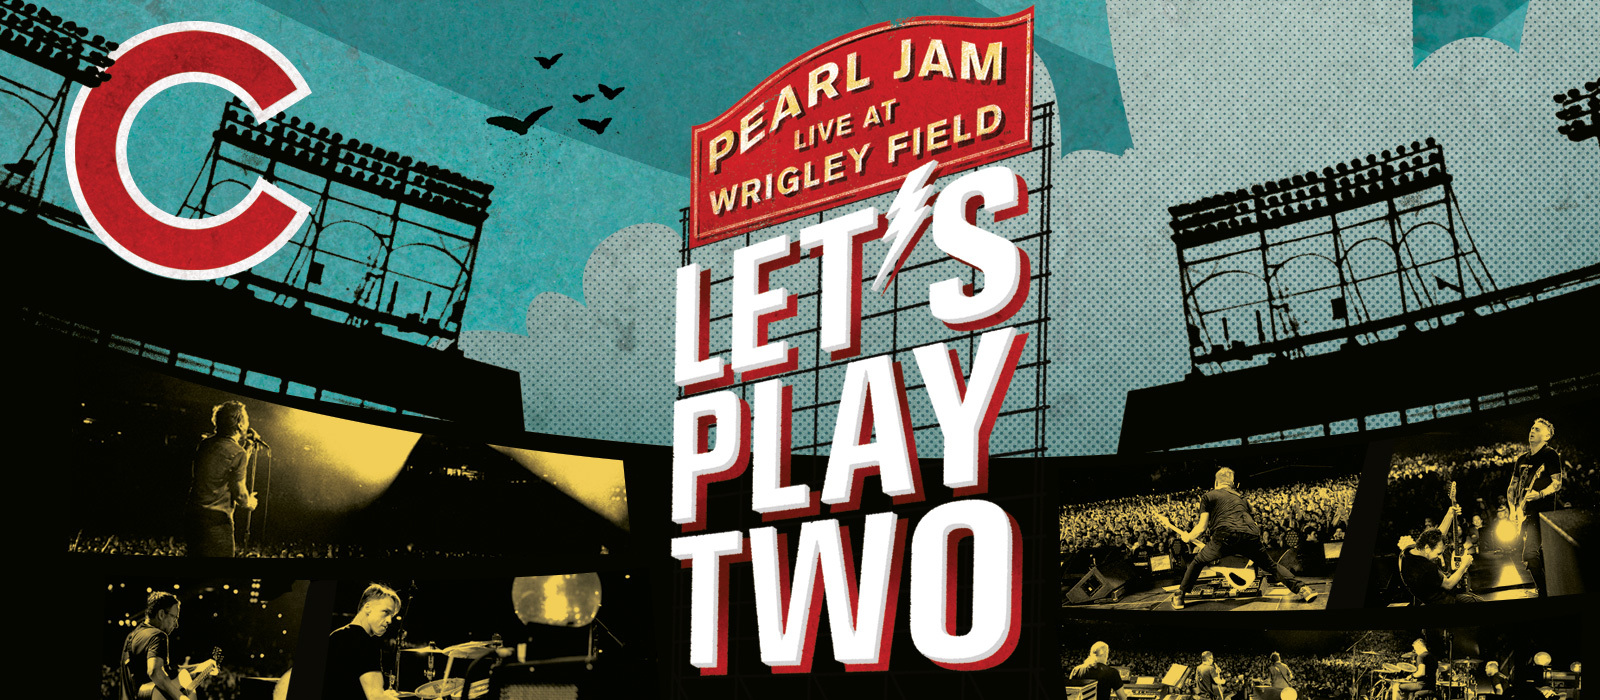 Pearl Jam: i video digitali, Blu-ray, DVD e VHS pubblicati dal gruppo